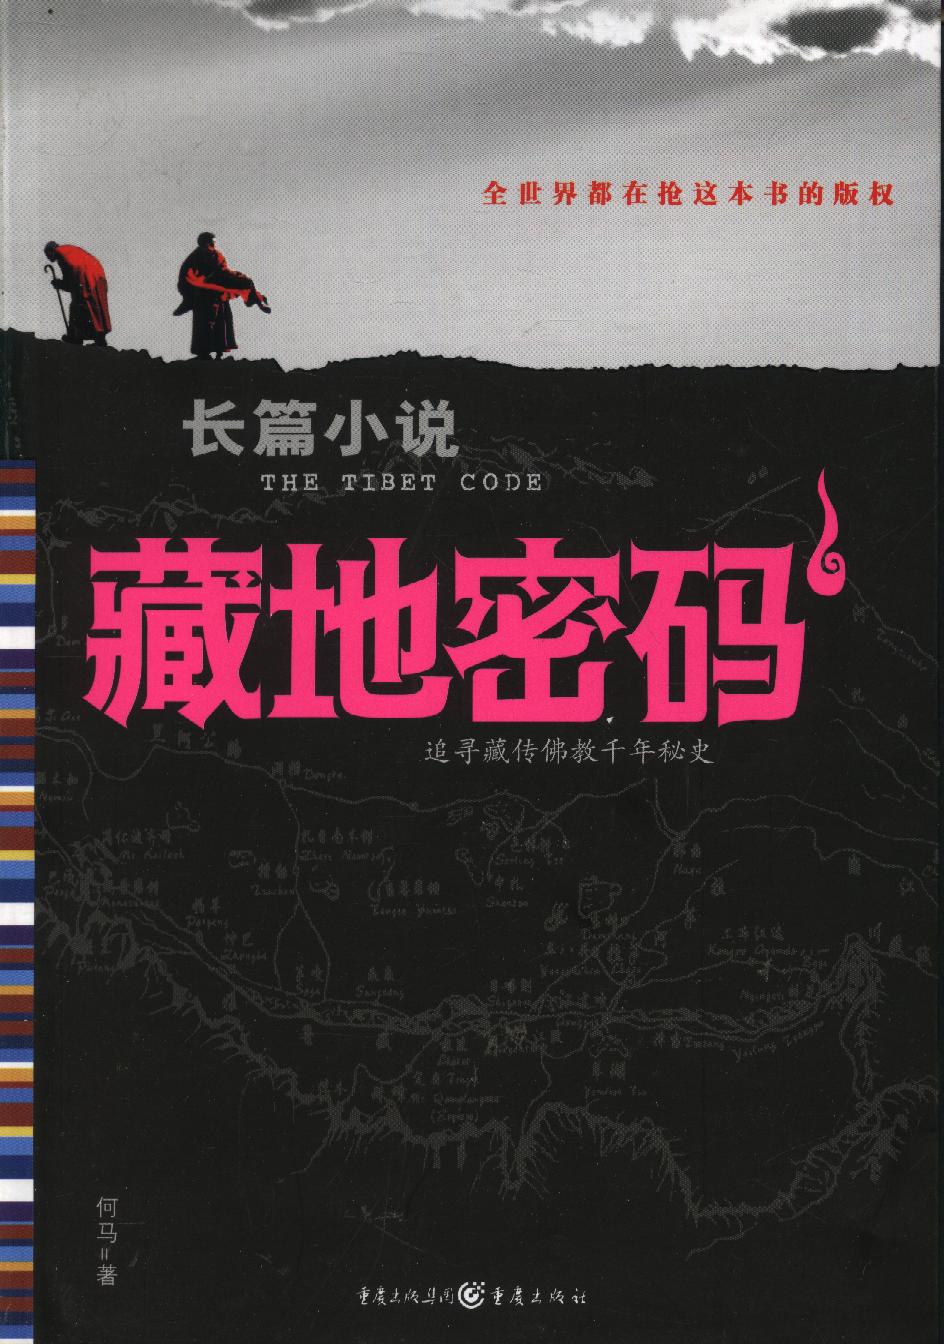 Hot online novel The Tibet Code